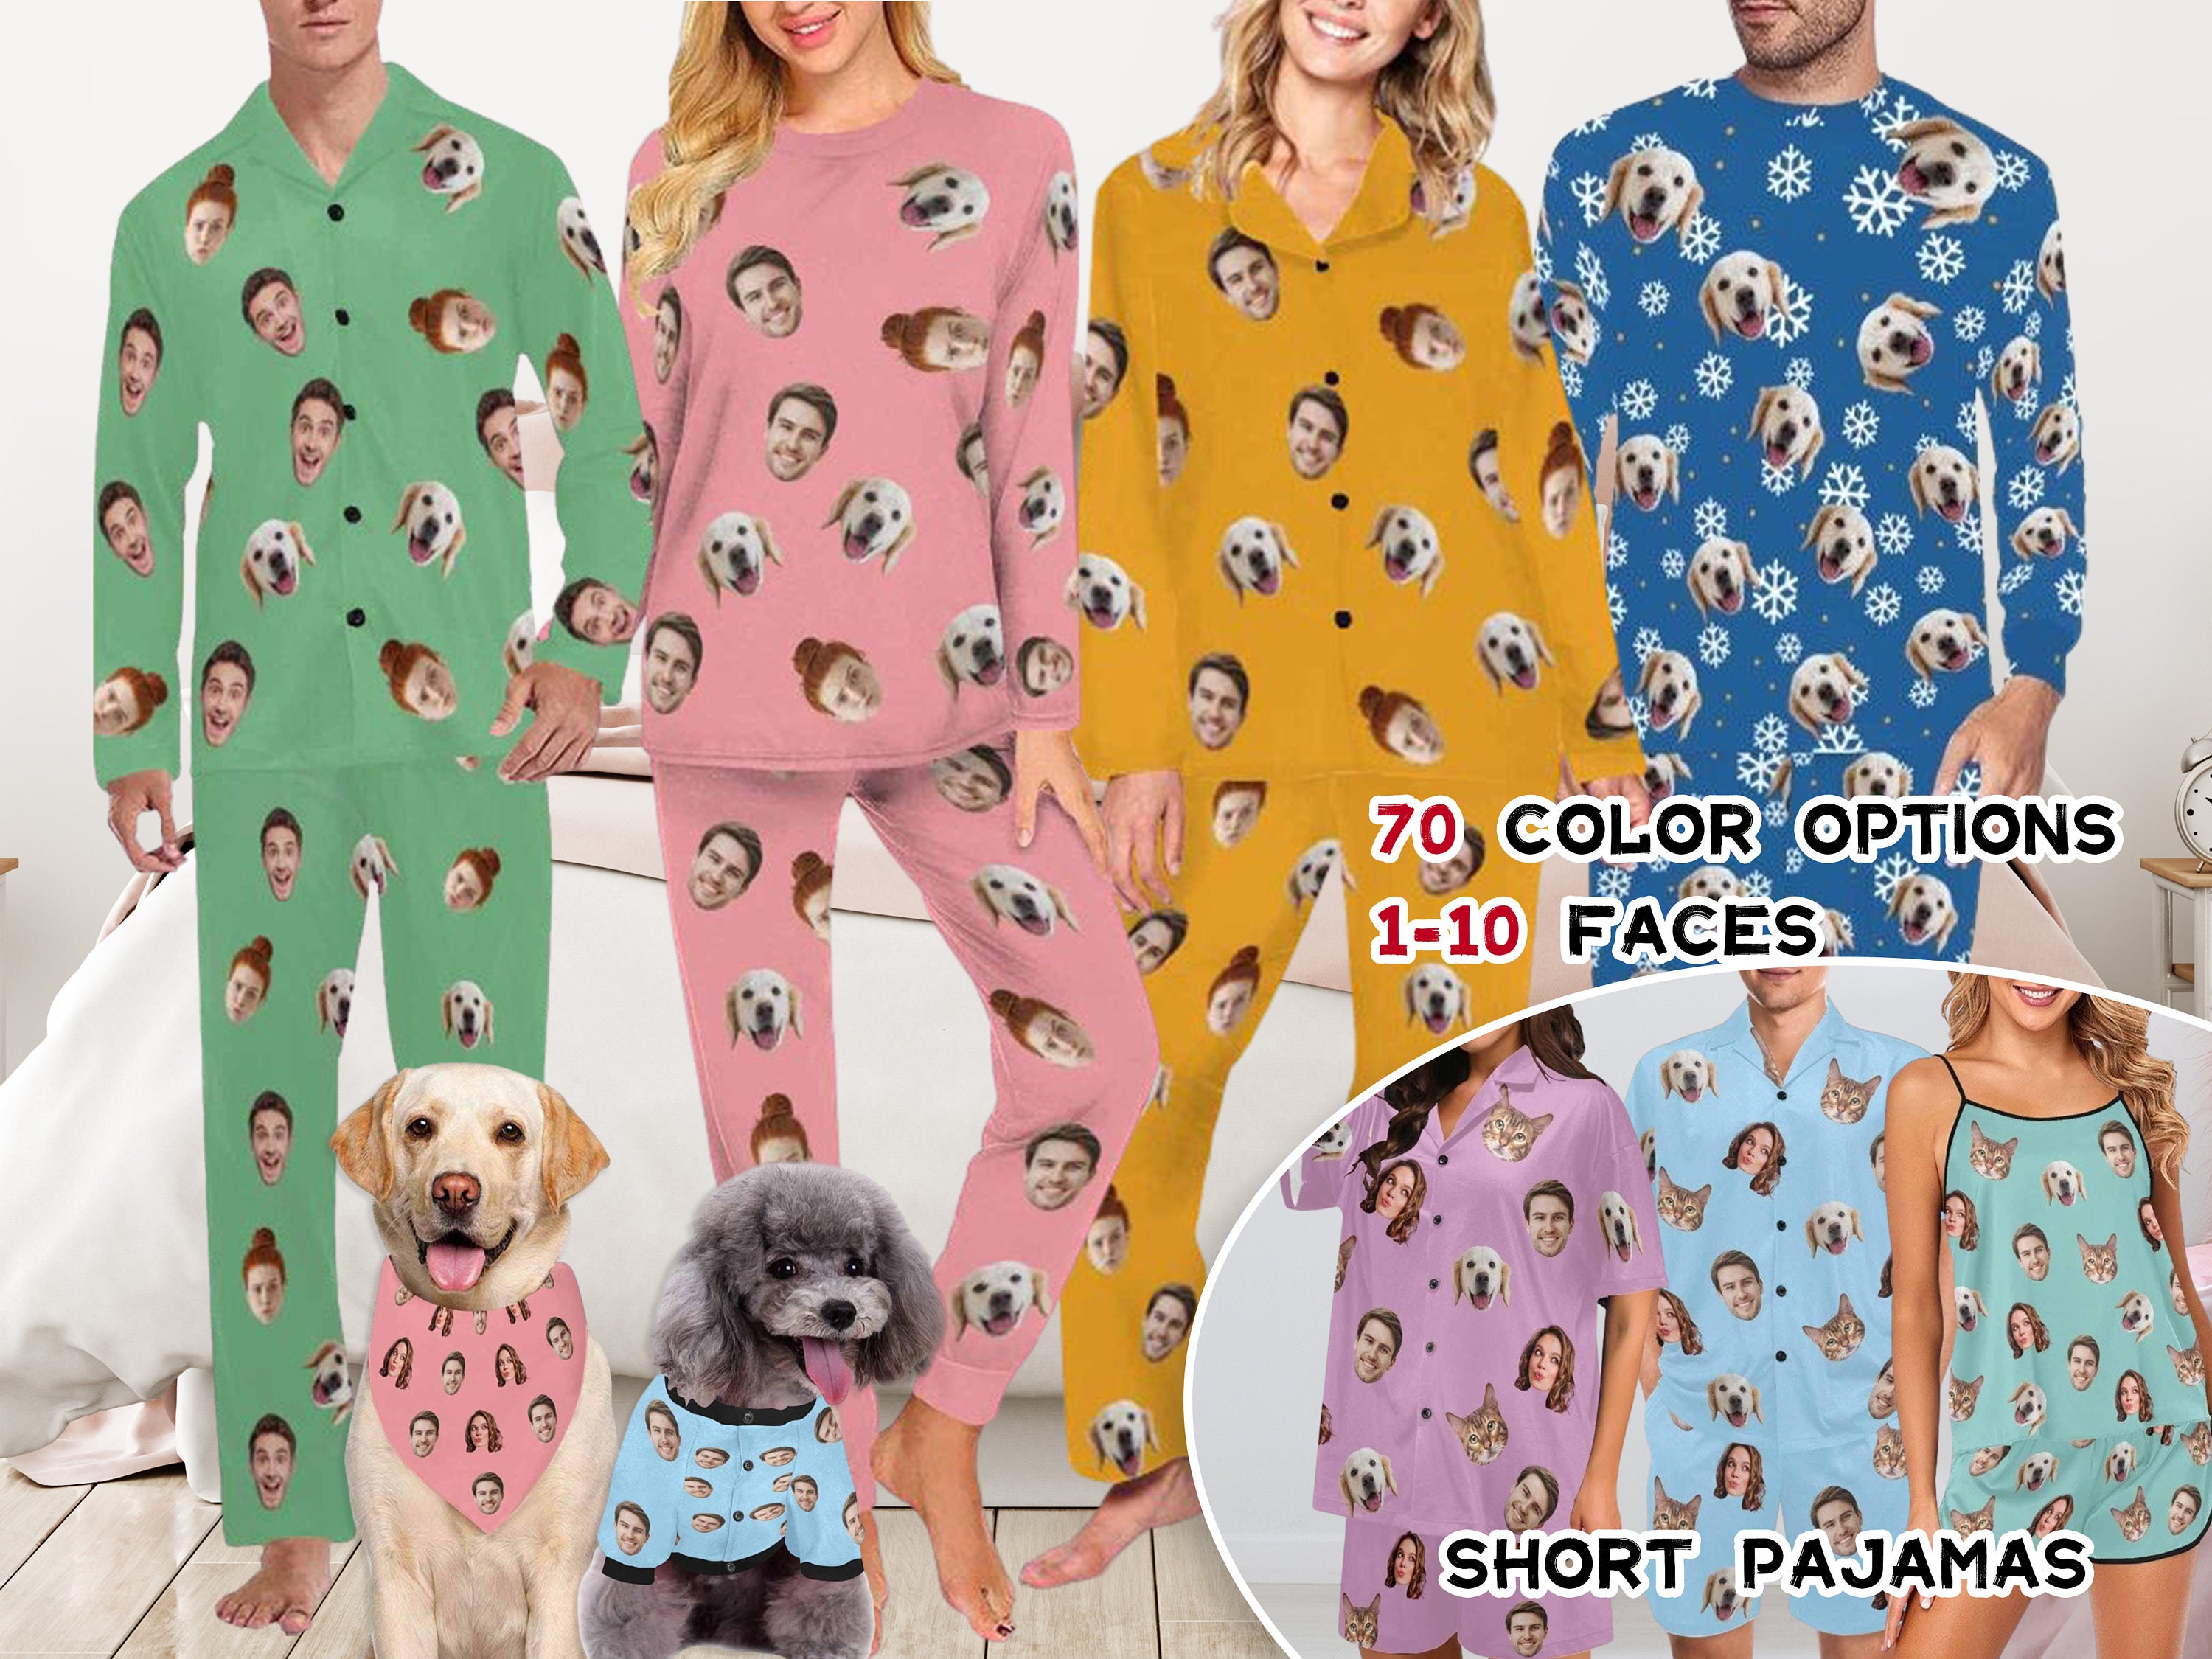 Pre-order Cats in Pajamas Quilt Kit by Elizabeth Hartman, April 2024 